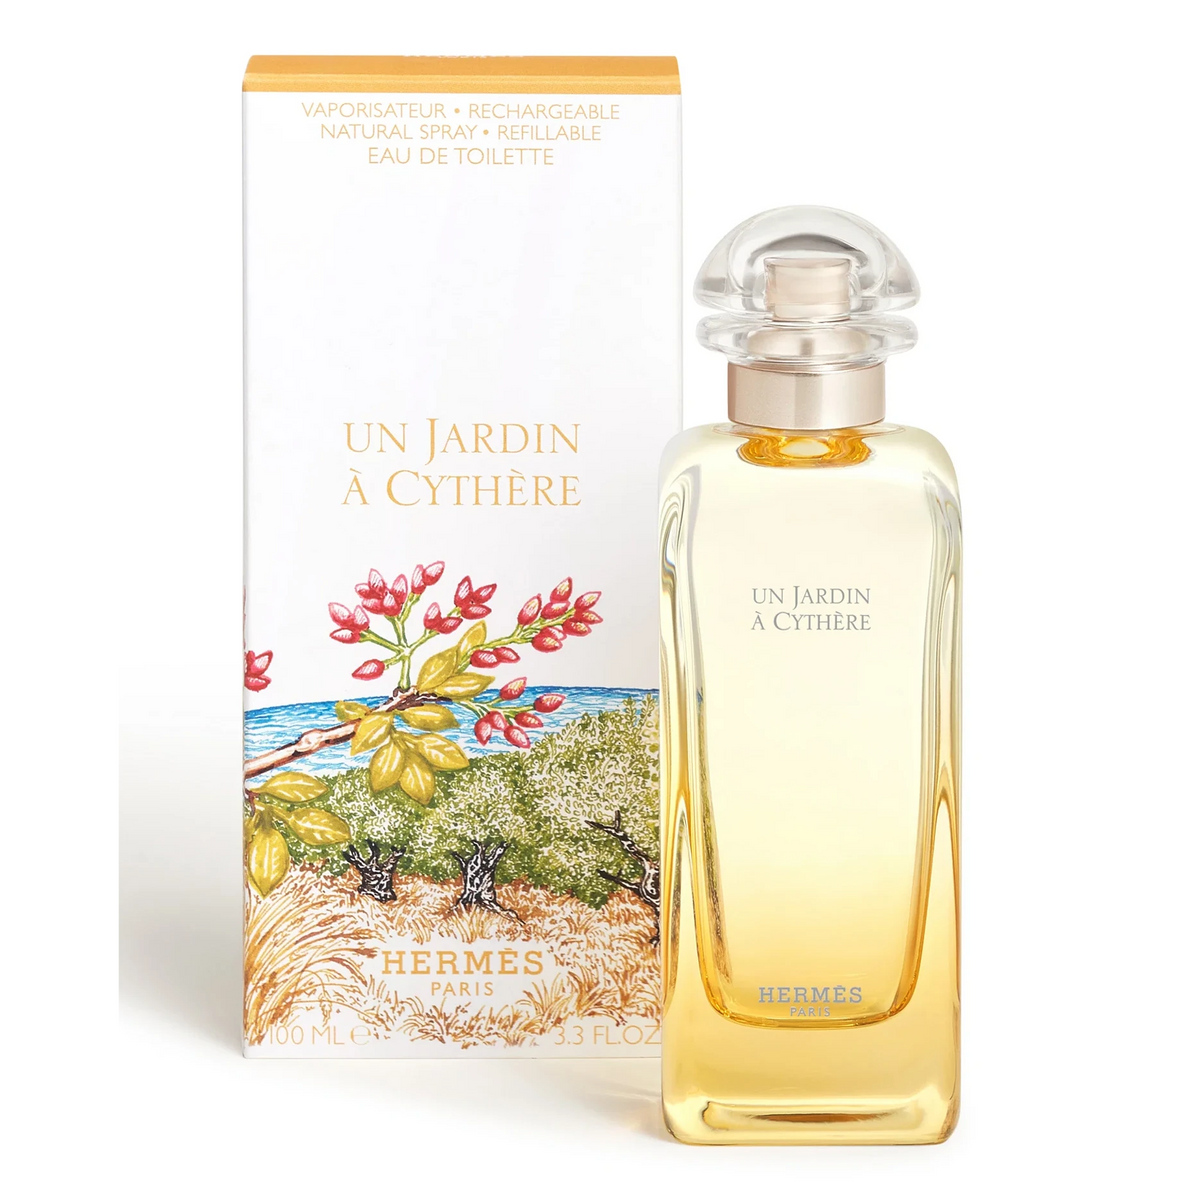 Hermes Un Jardin A Cythere Perfume For Unisex EDT 100ml Refillable